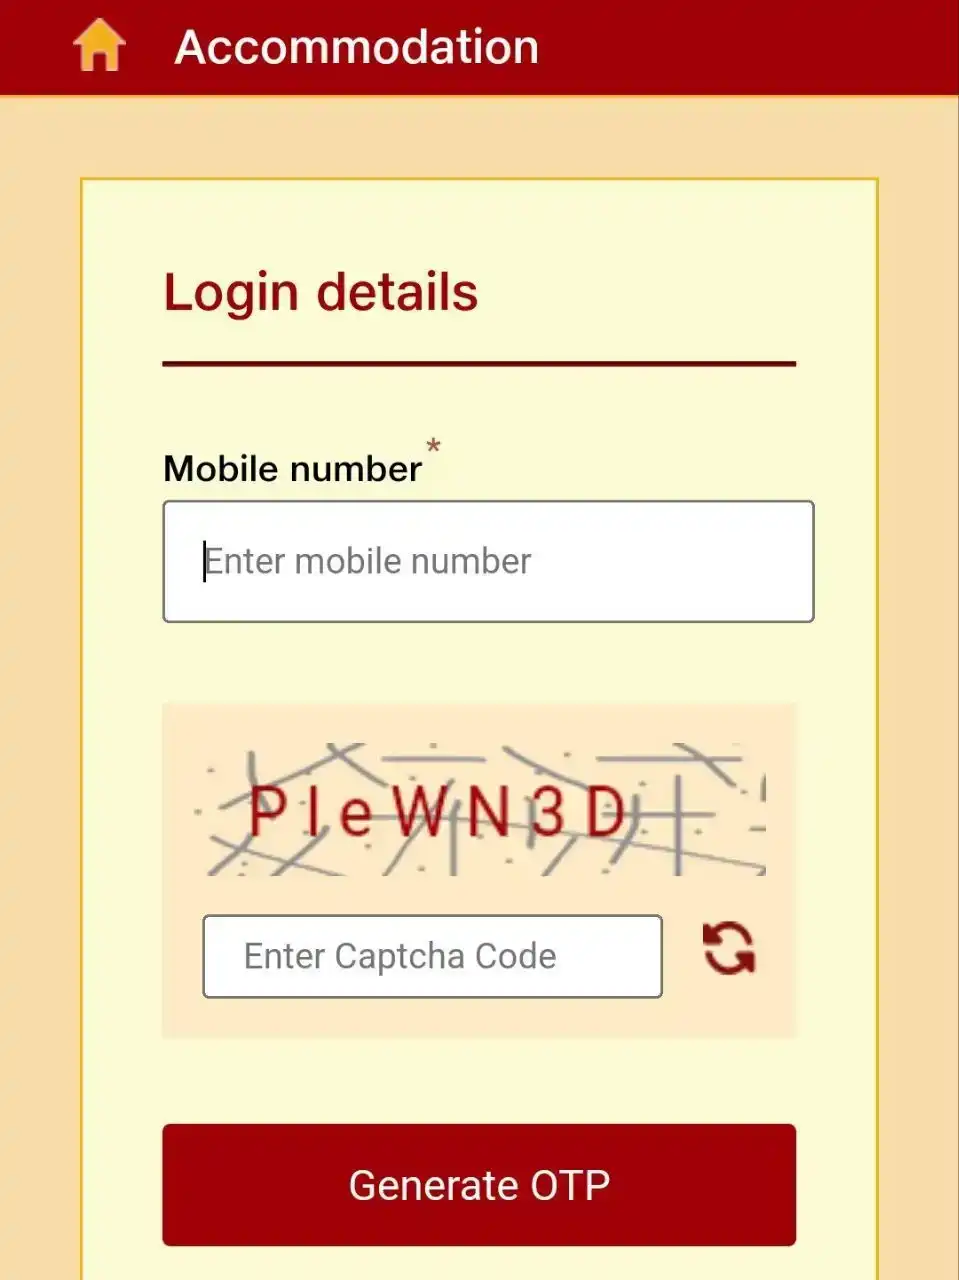 Login using Mobile Number